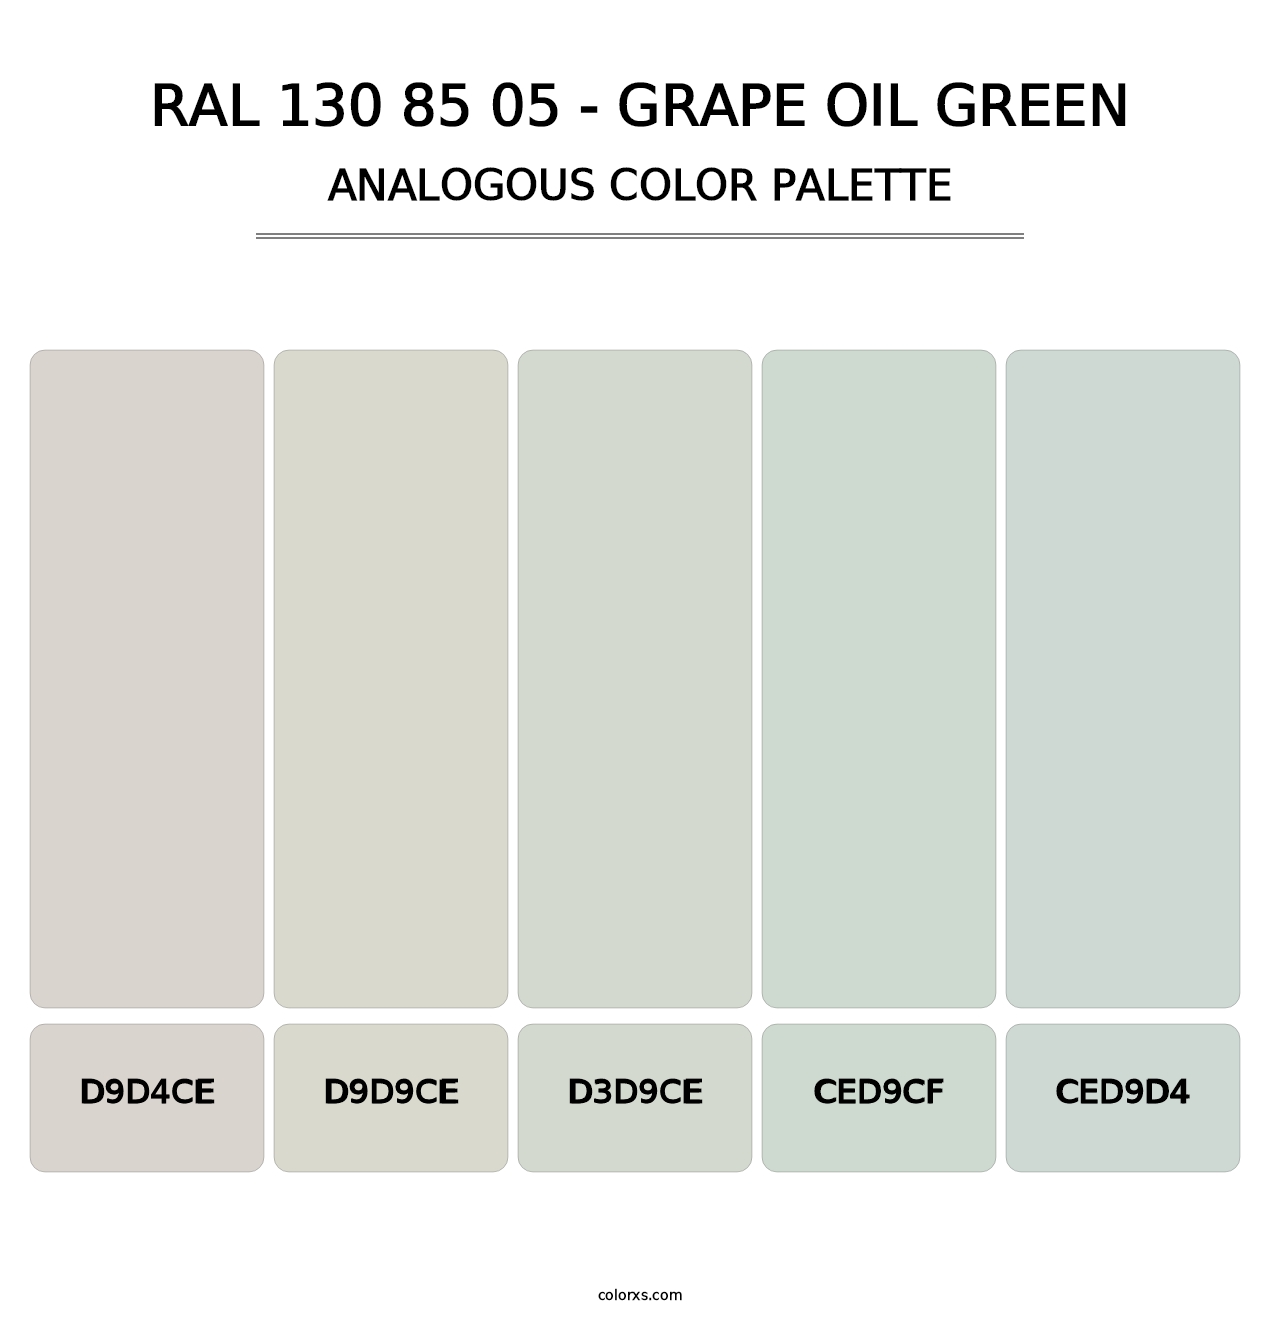 RAL 130 85 05 - Grape Oil Green - Analogous Color Palette